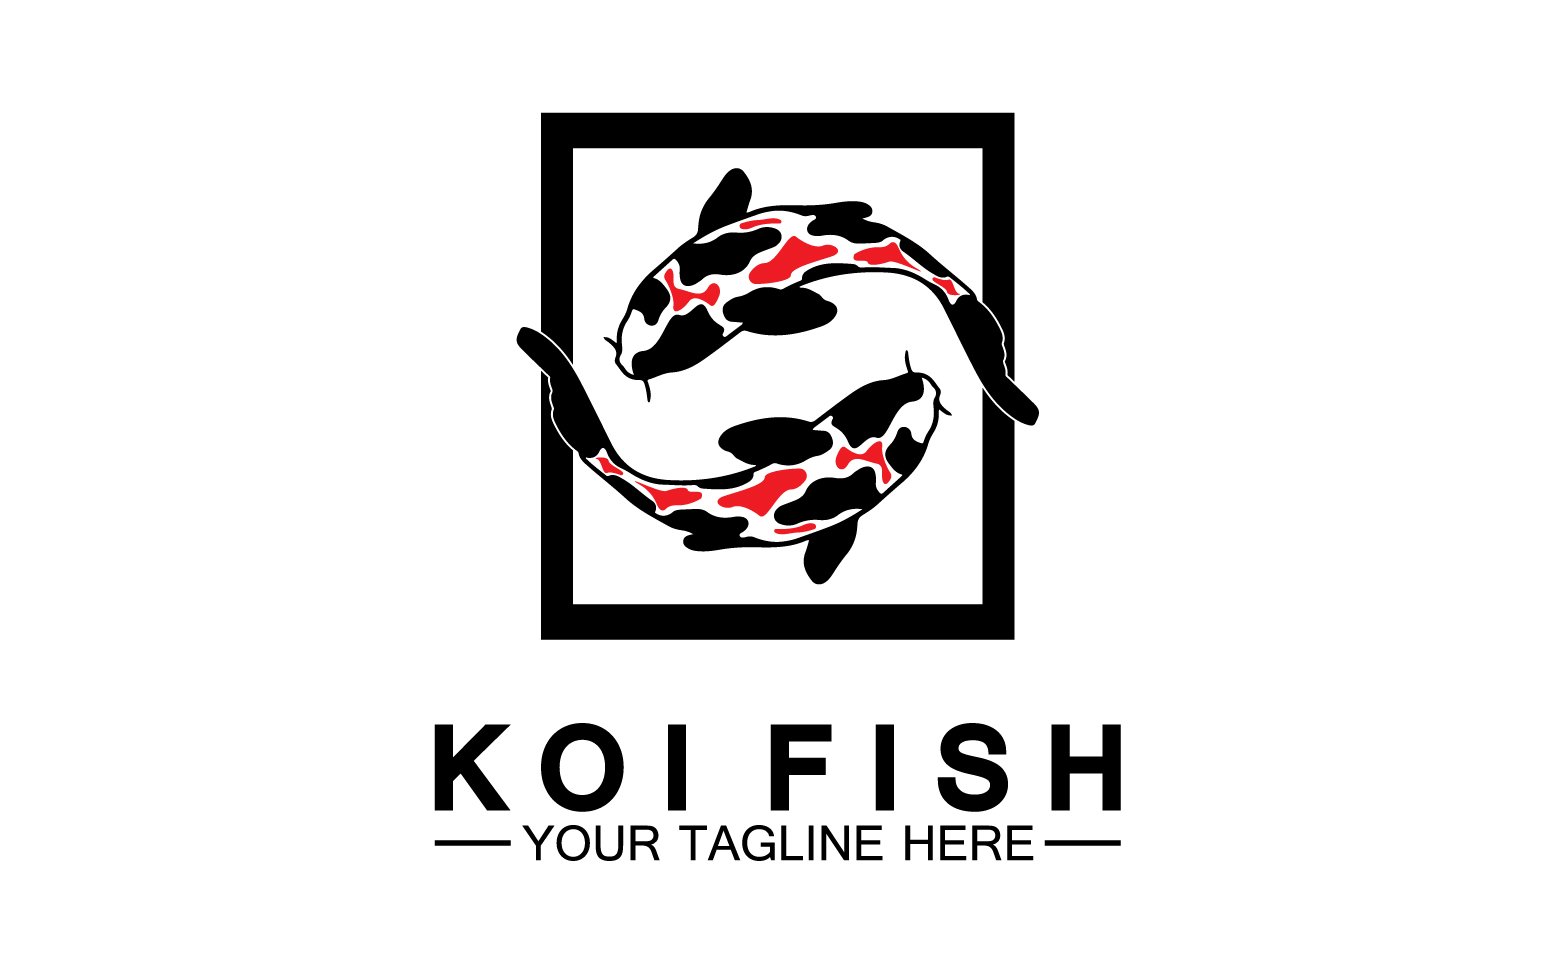 Fish koi black and red icon logo vector v38